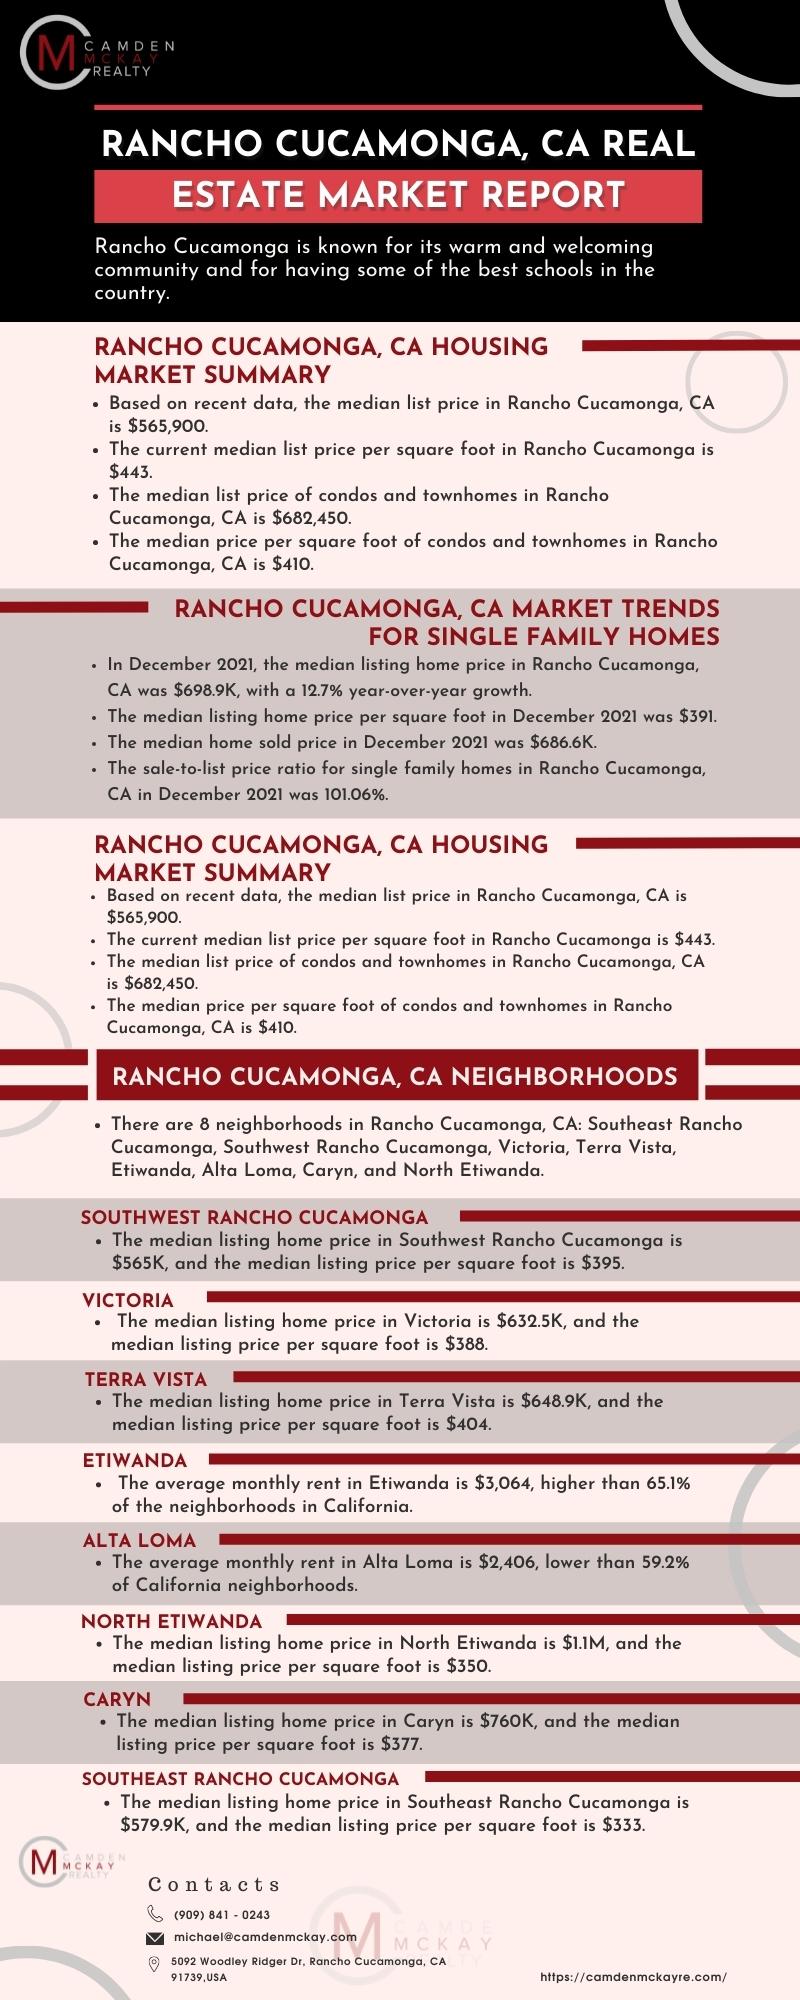 Rancho Cucamanga, CA Real Estate Market Report Infographic